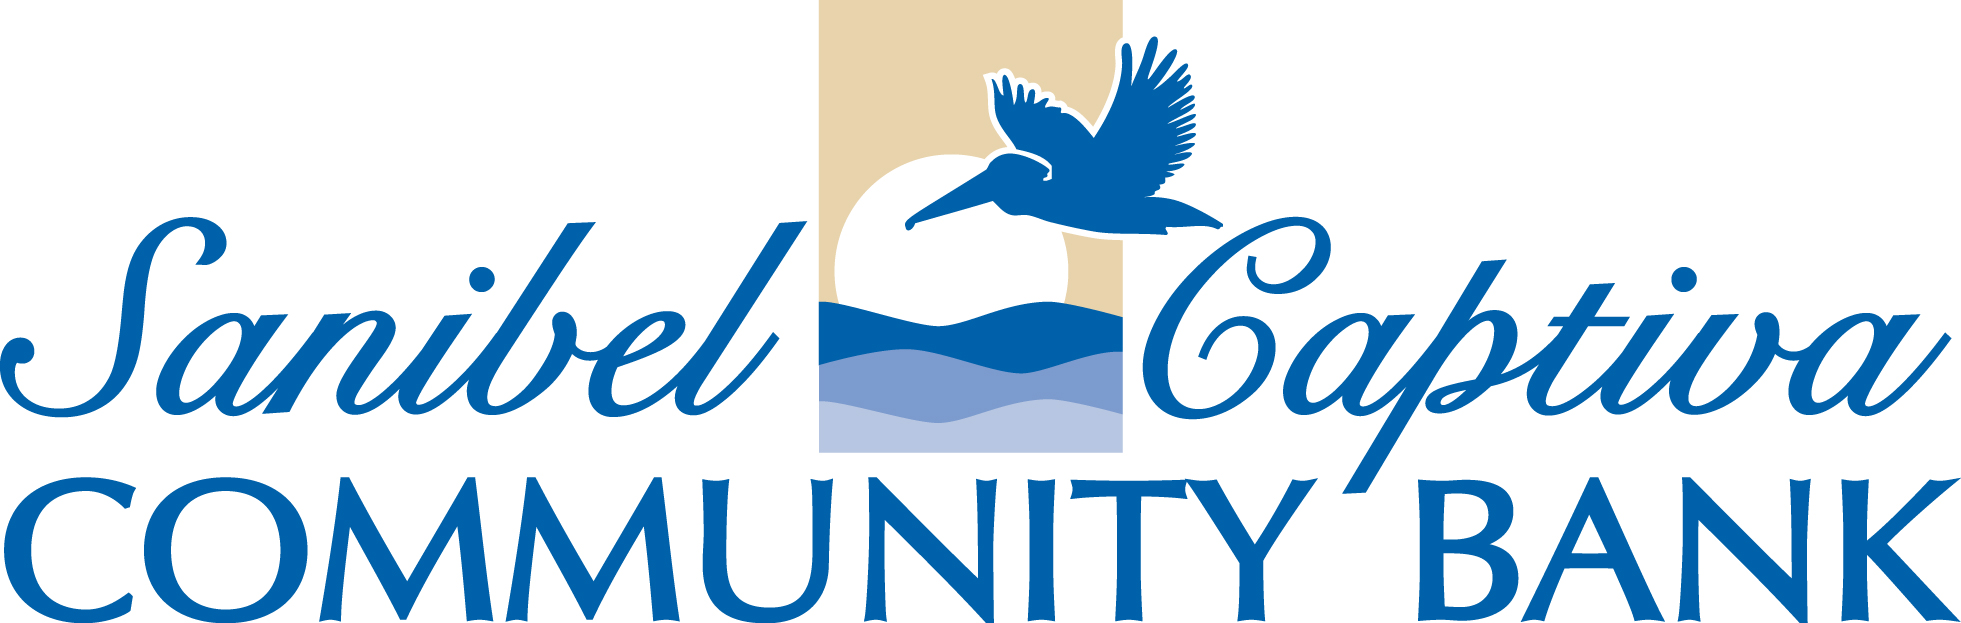 Sanibel Captiva Community Bank - Final Logo.jpg